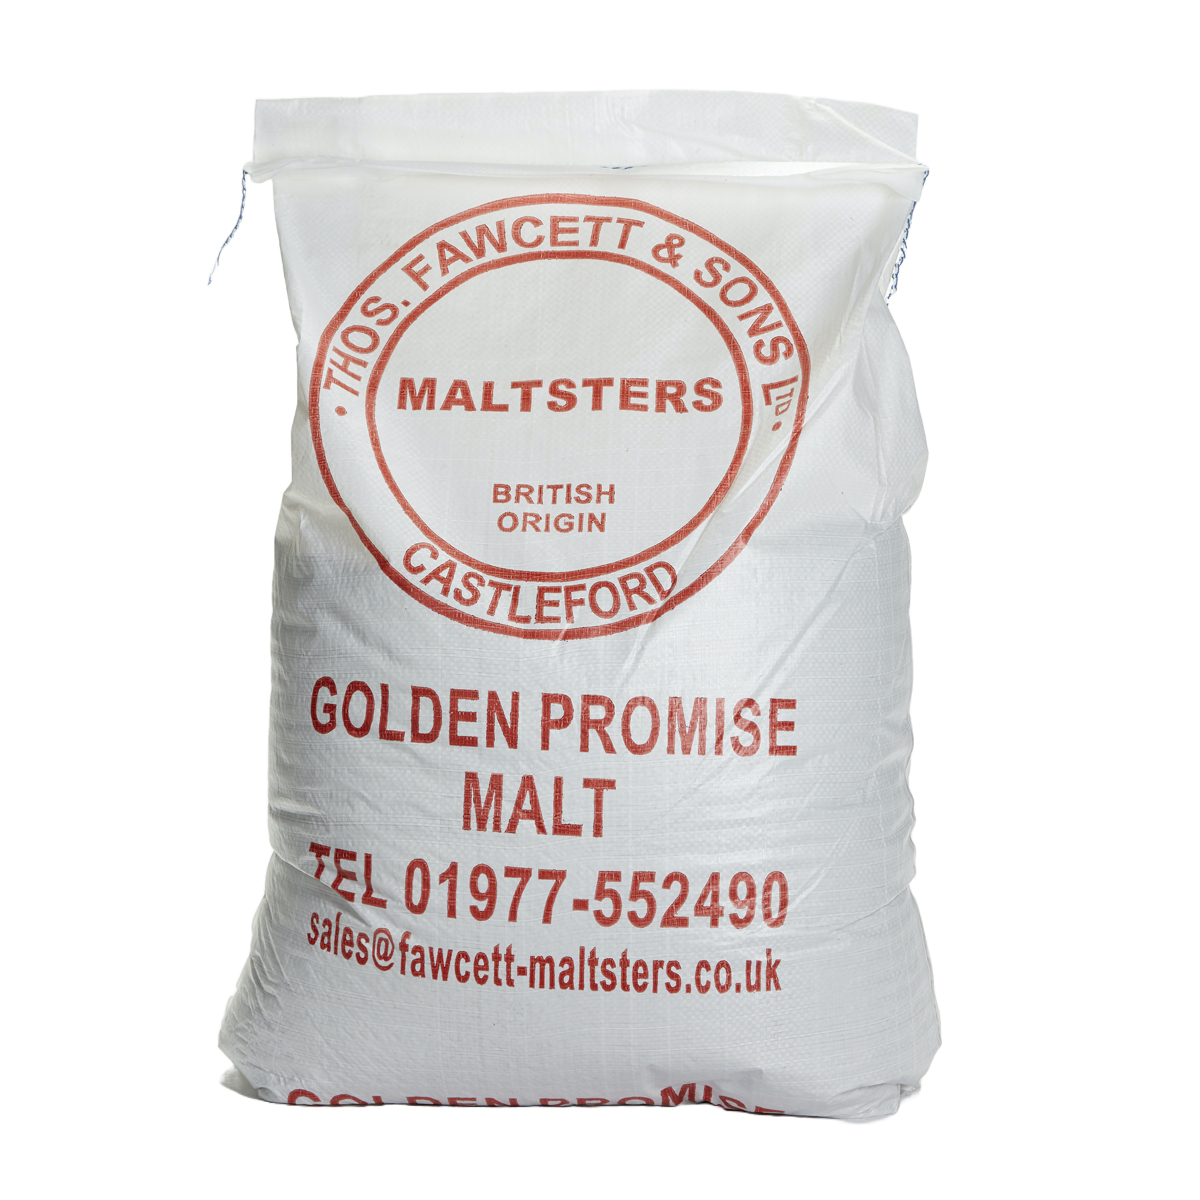 TF&S Golden Promise Pale Ale